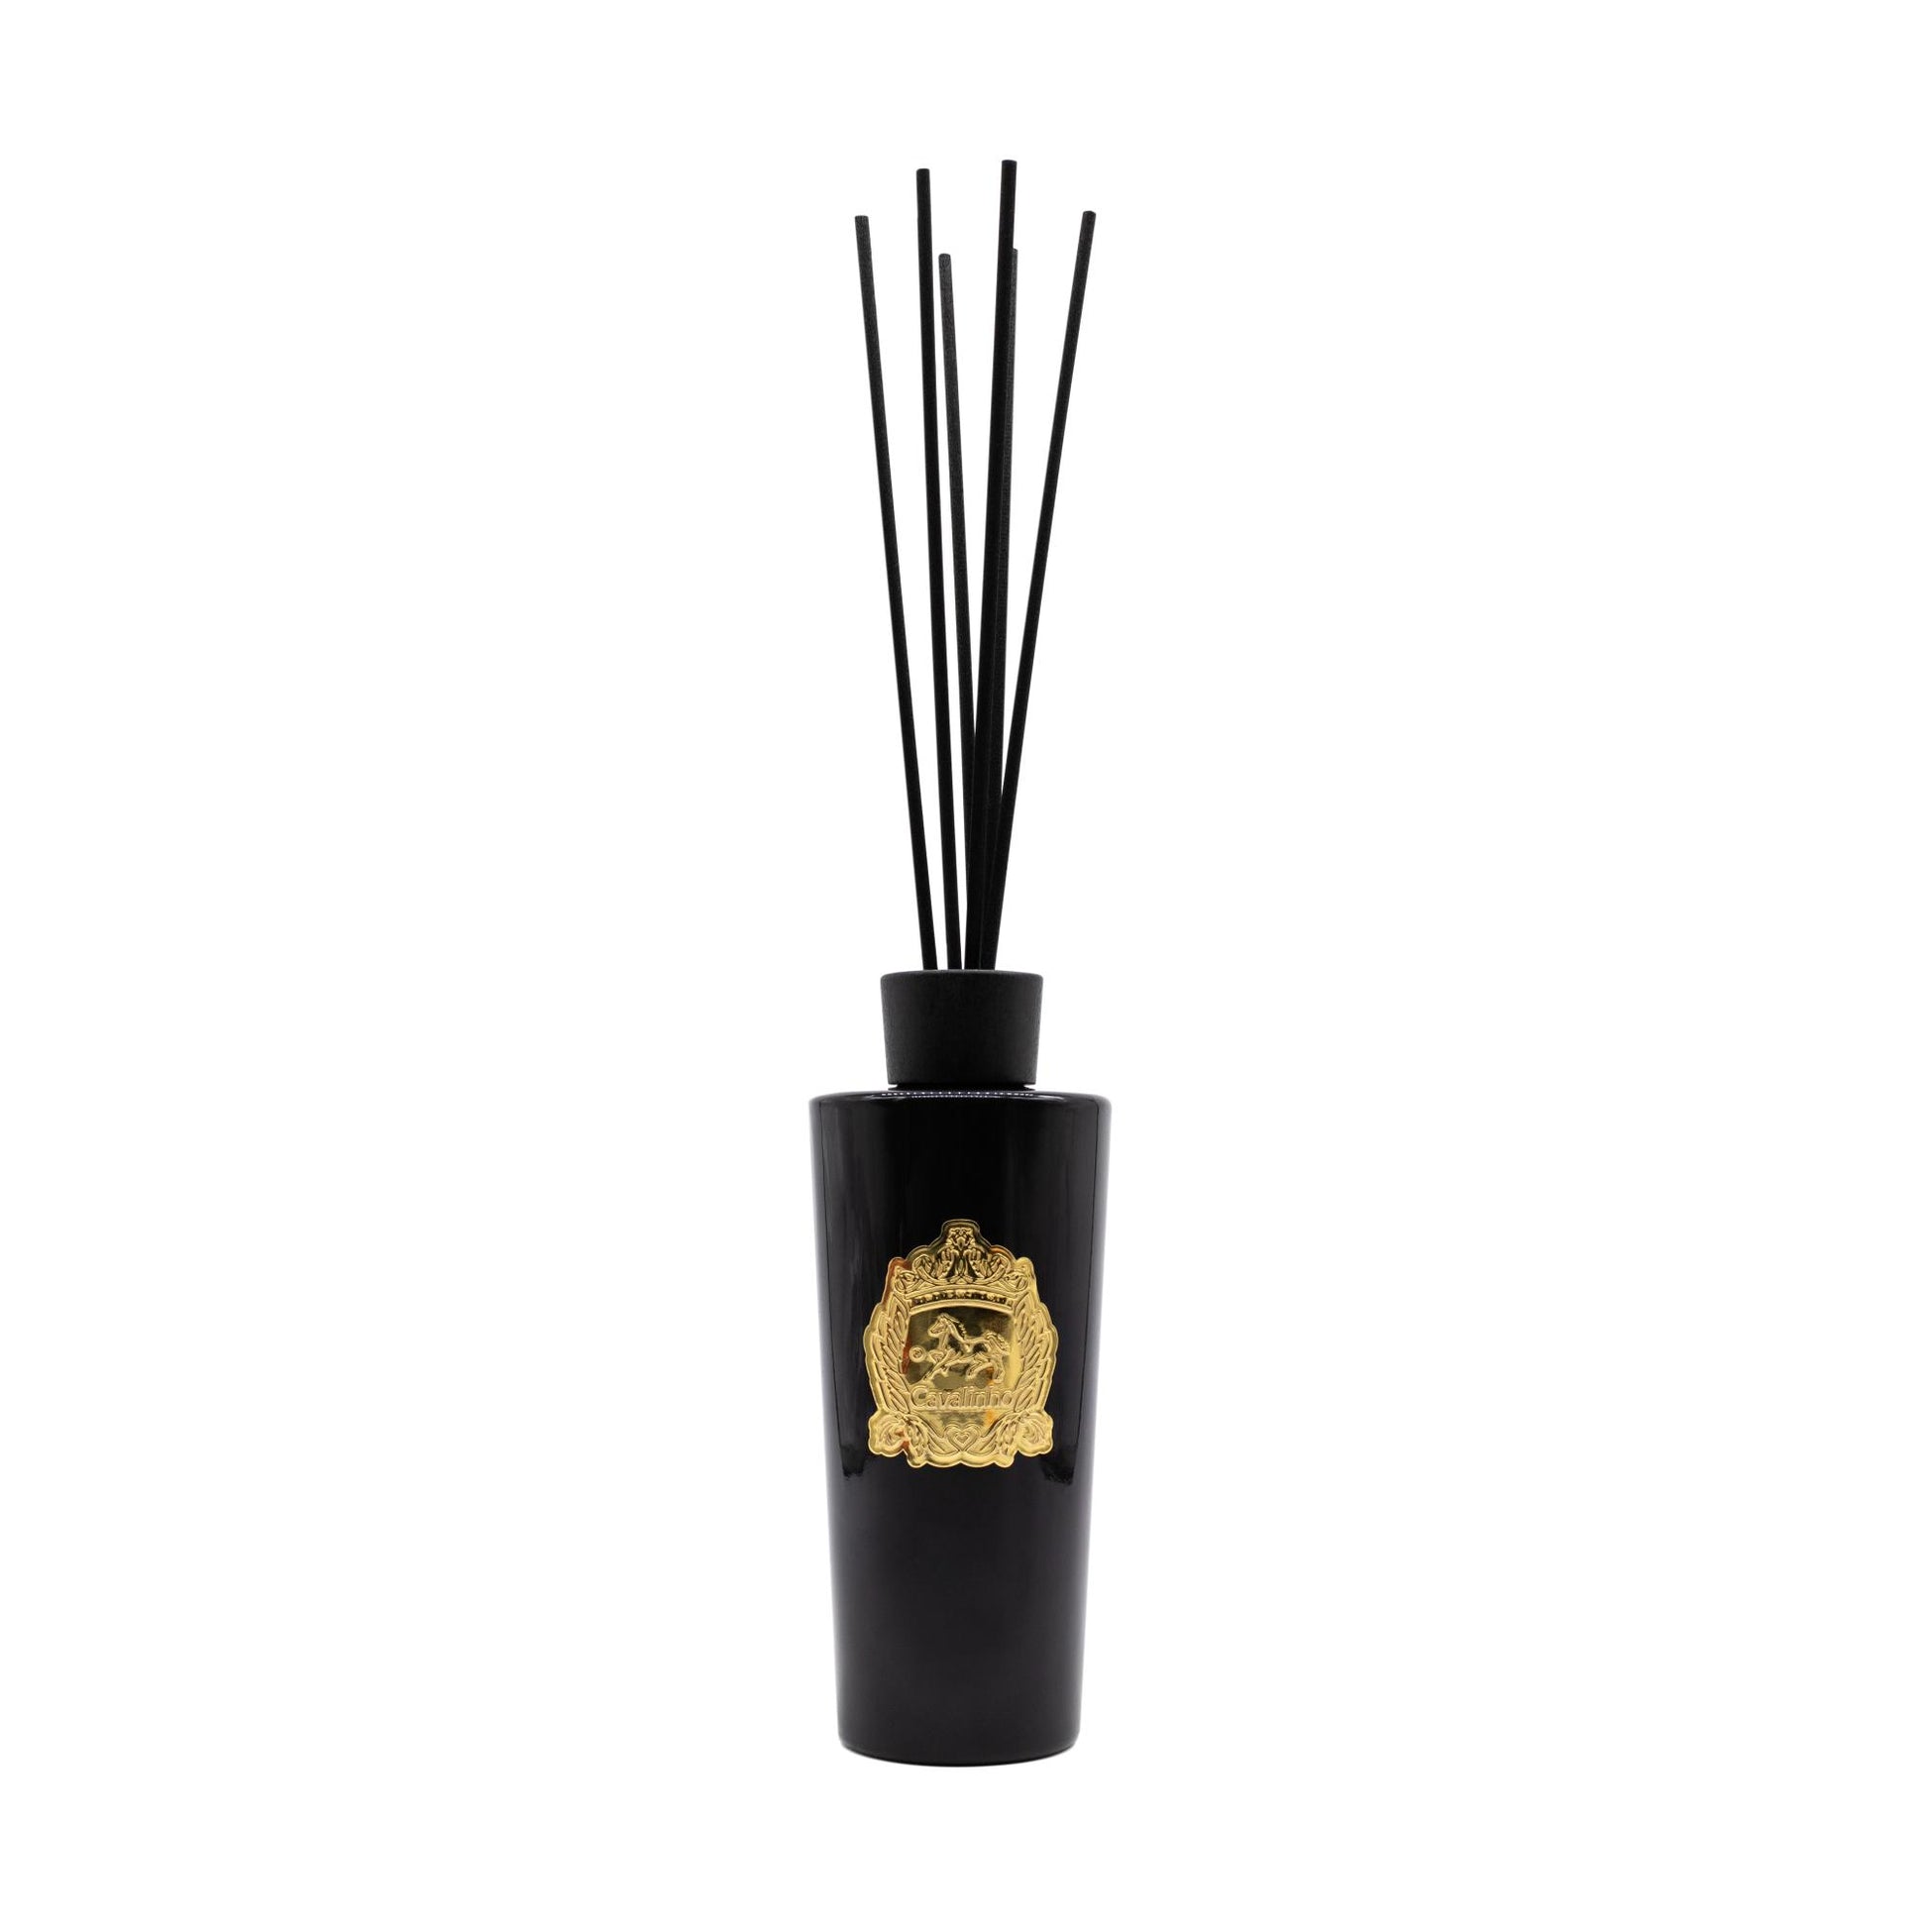 Cavalinho Divine Reed Diffuser Home Fragrance - 500ml - 38010006.01.50_1